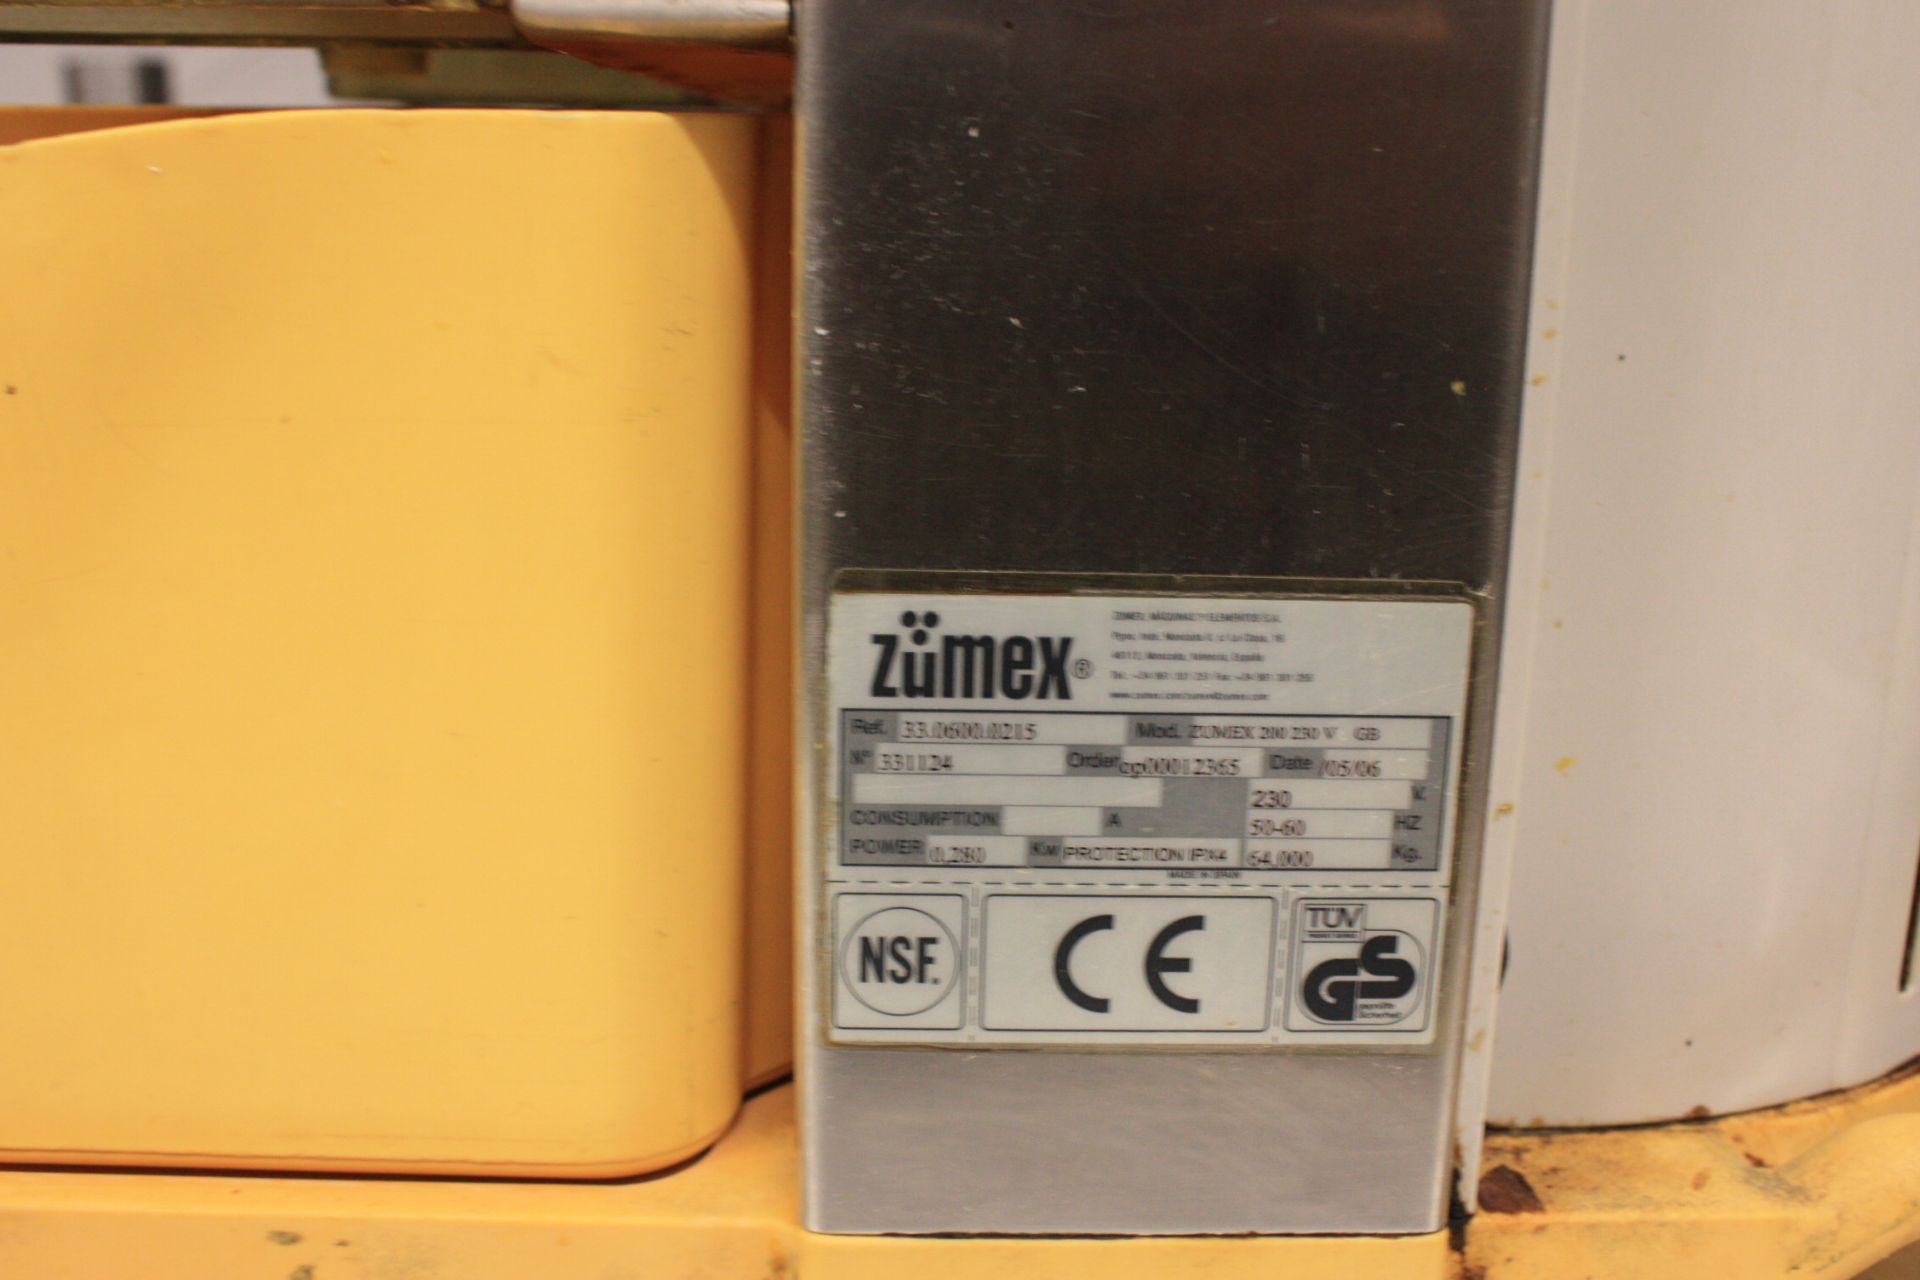 Zumex Whole fresh orange juicer on stainless steel stand. 240v. Model Zumex 200. - Image 2 of 4